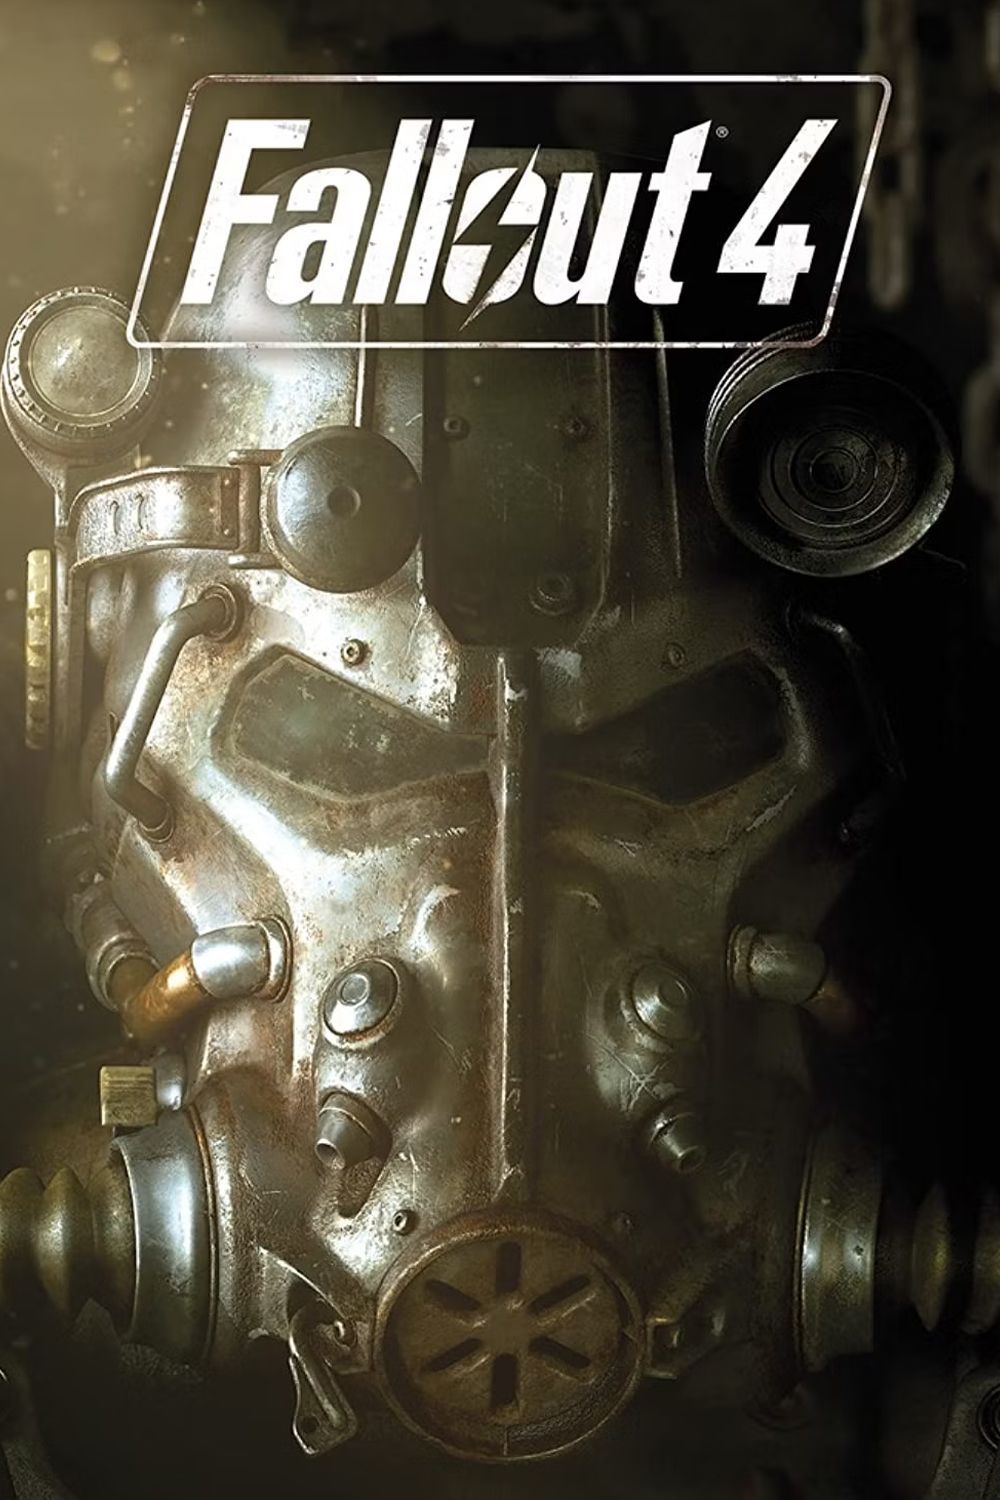 Arte da caixa Fallout 4